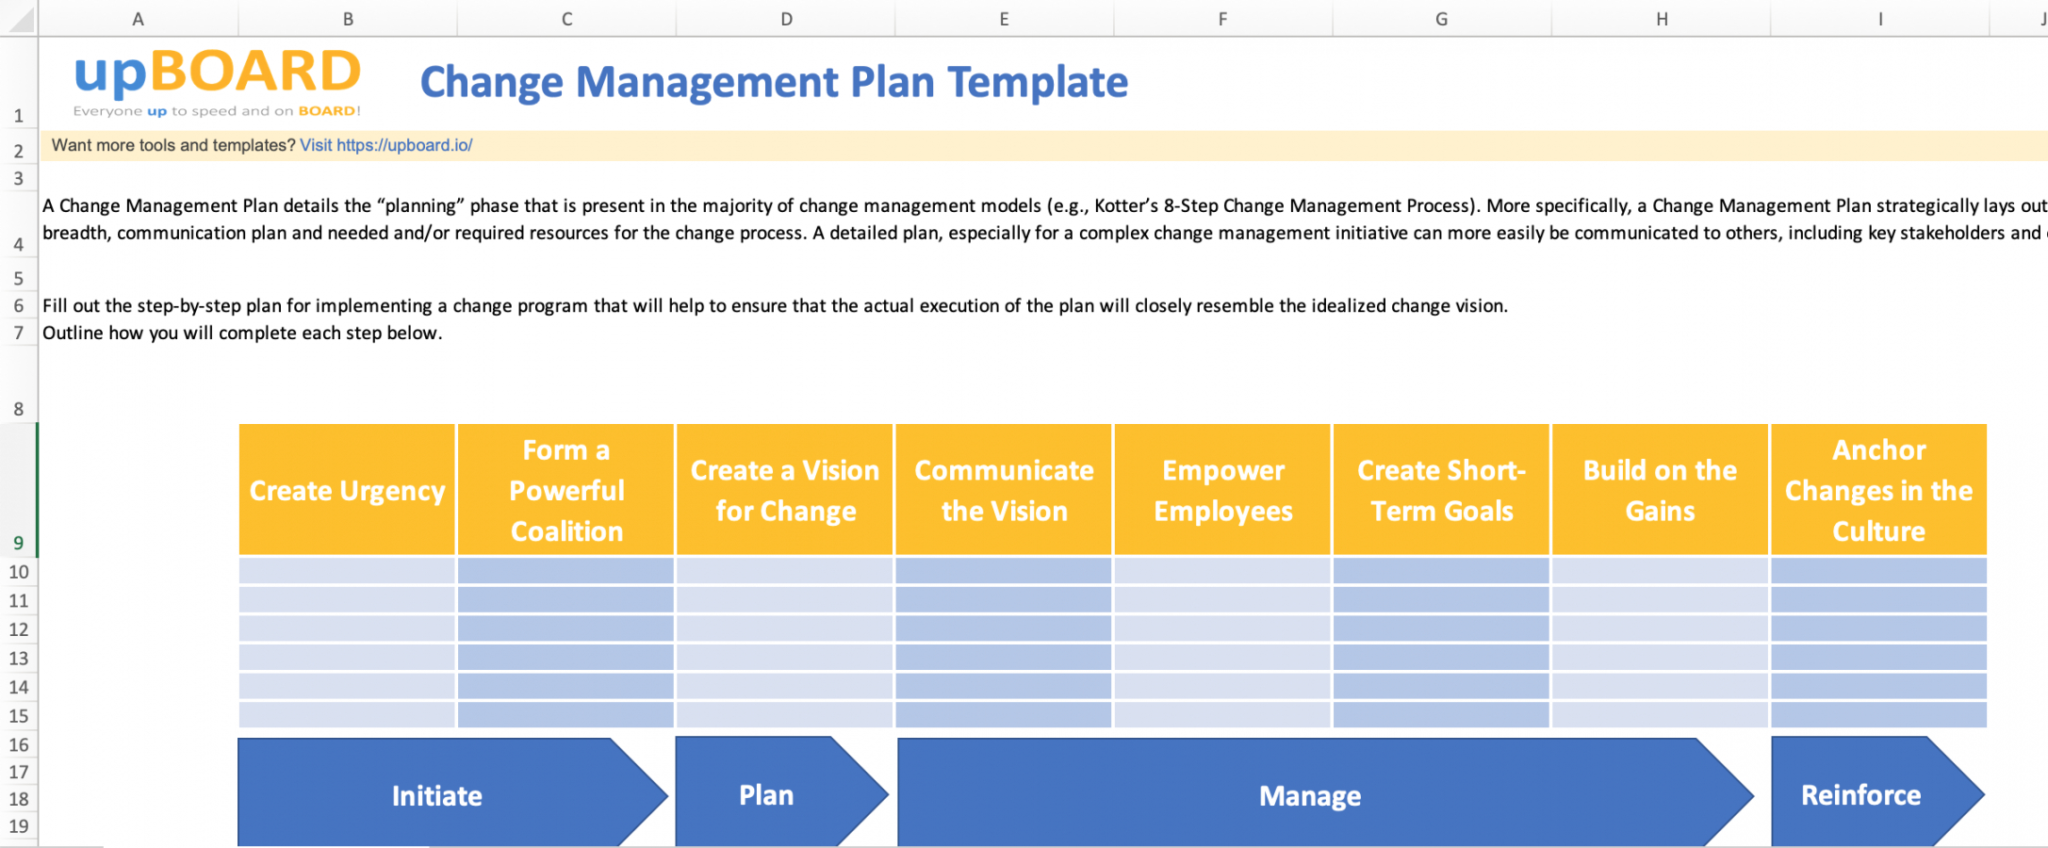 Editable Change Management Plan Online Software Tools & Templates ...